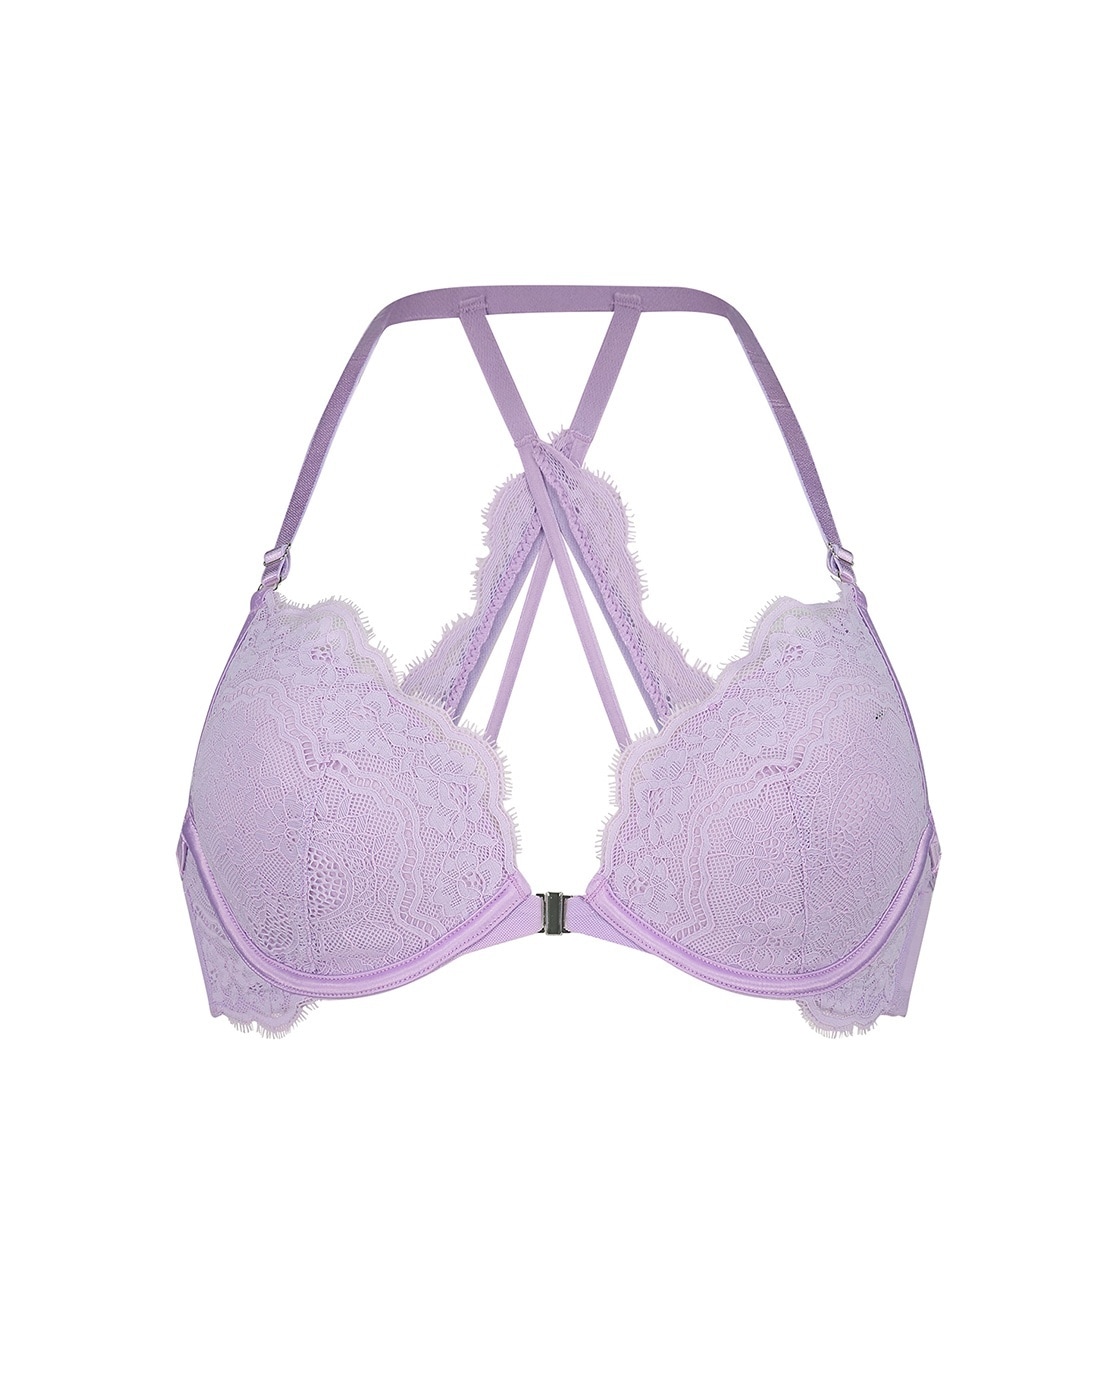 Emerson Women's Lace Push Up Bra - Purple - Size 16DD